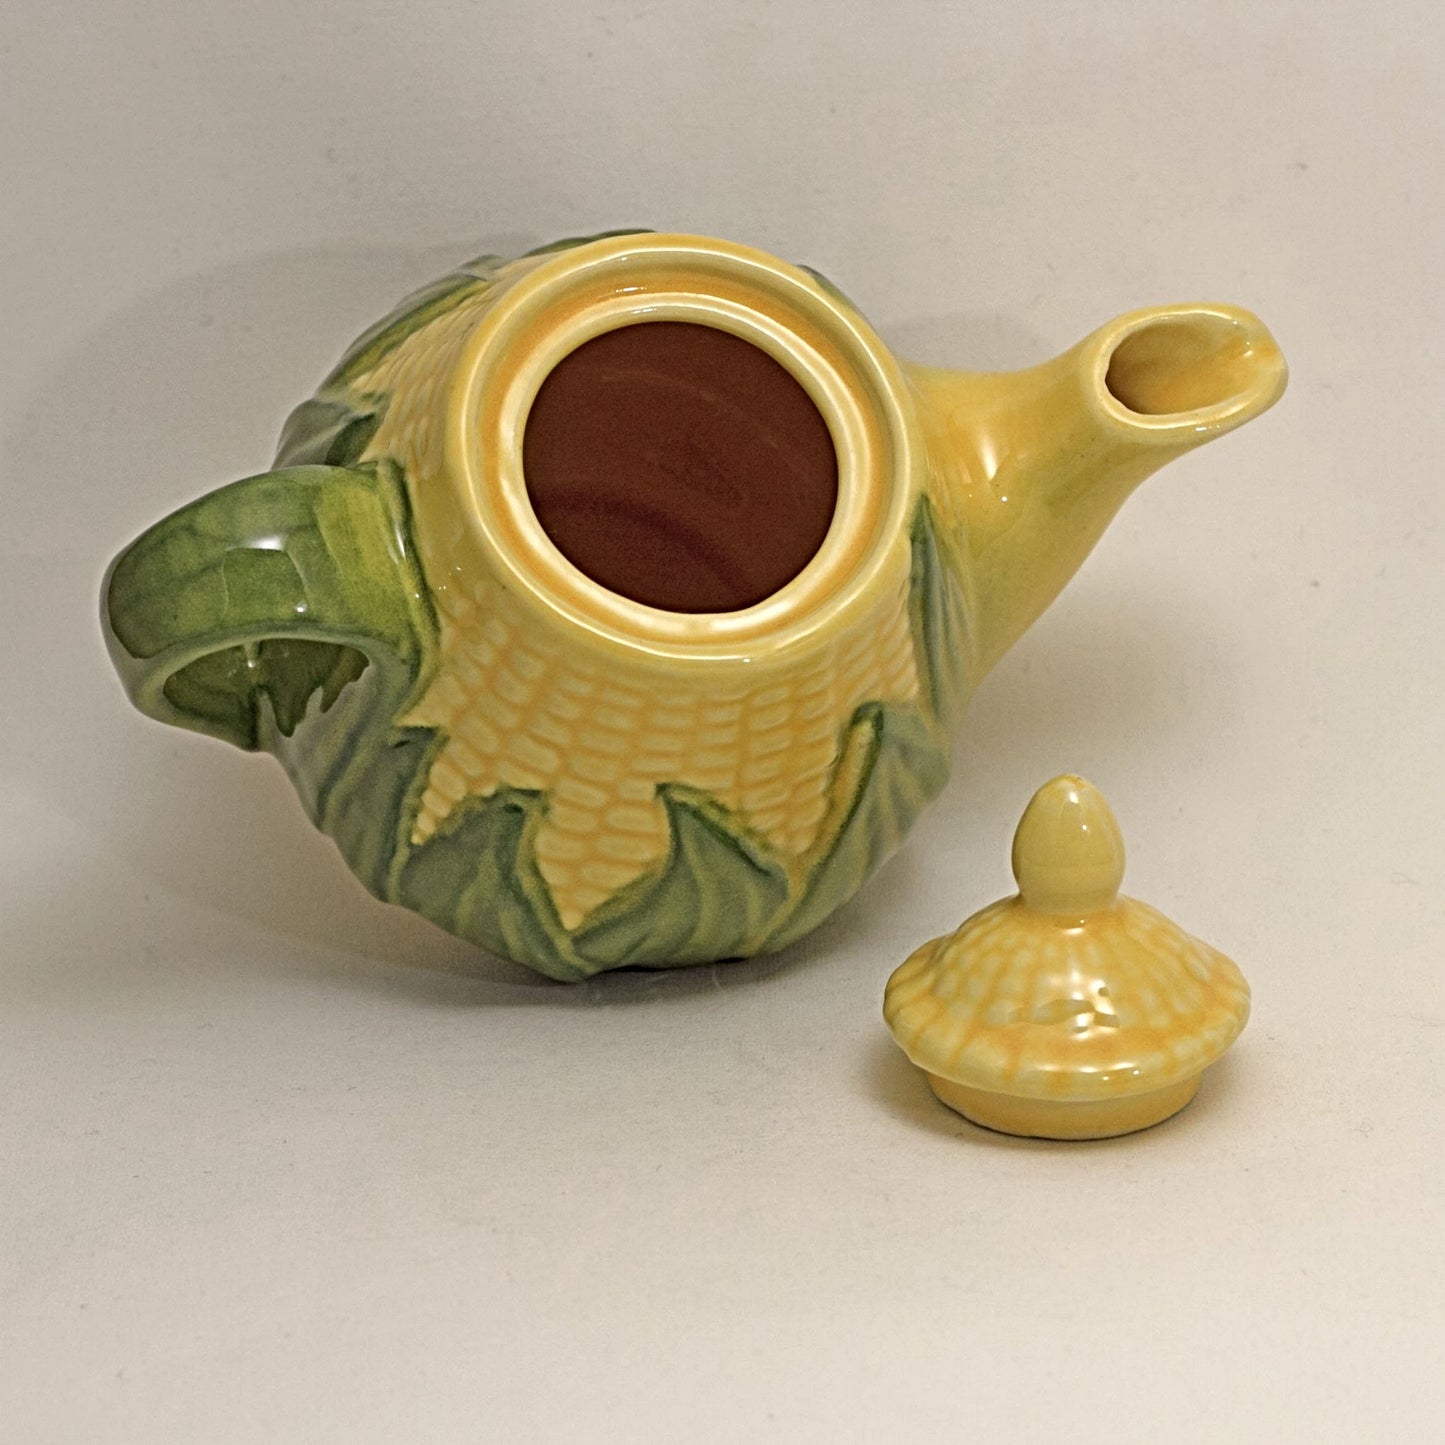 SHAWNEE POTTERY CORN KING Small Teapot Circa 1946 - 1954